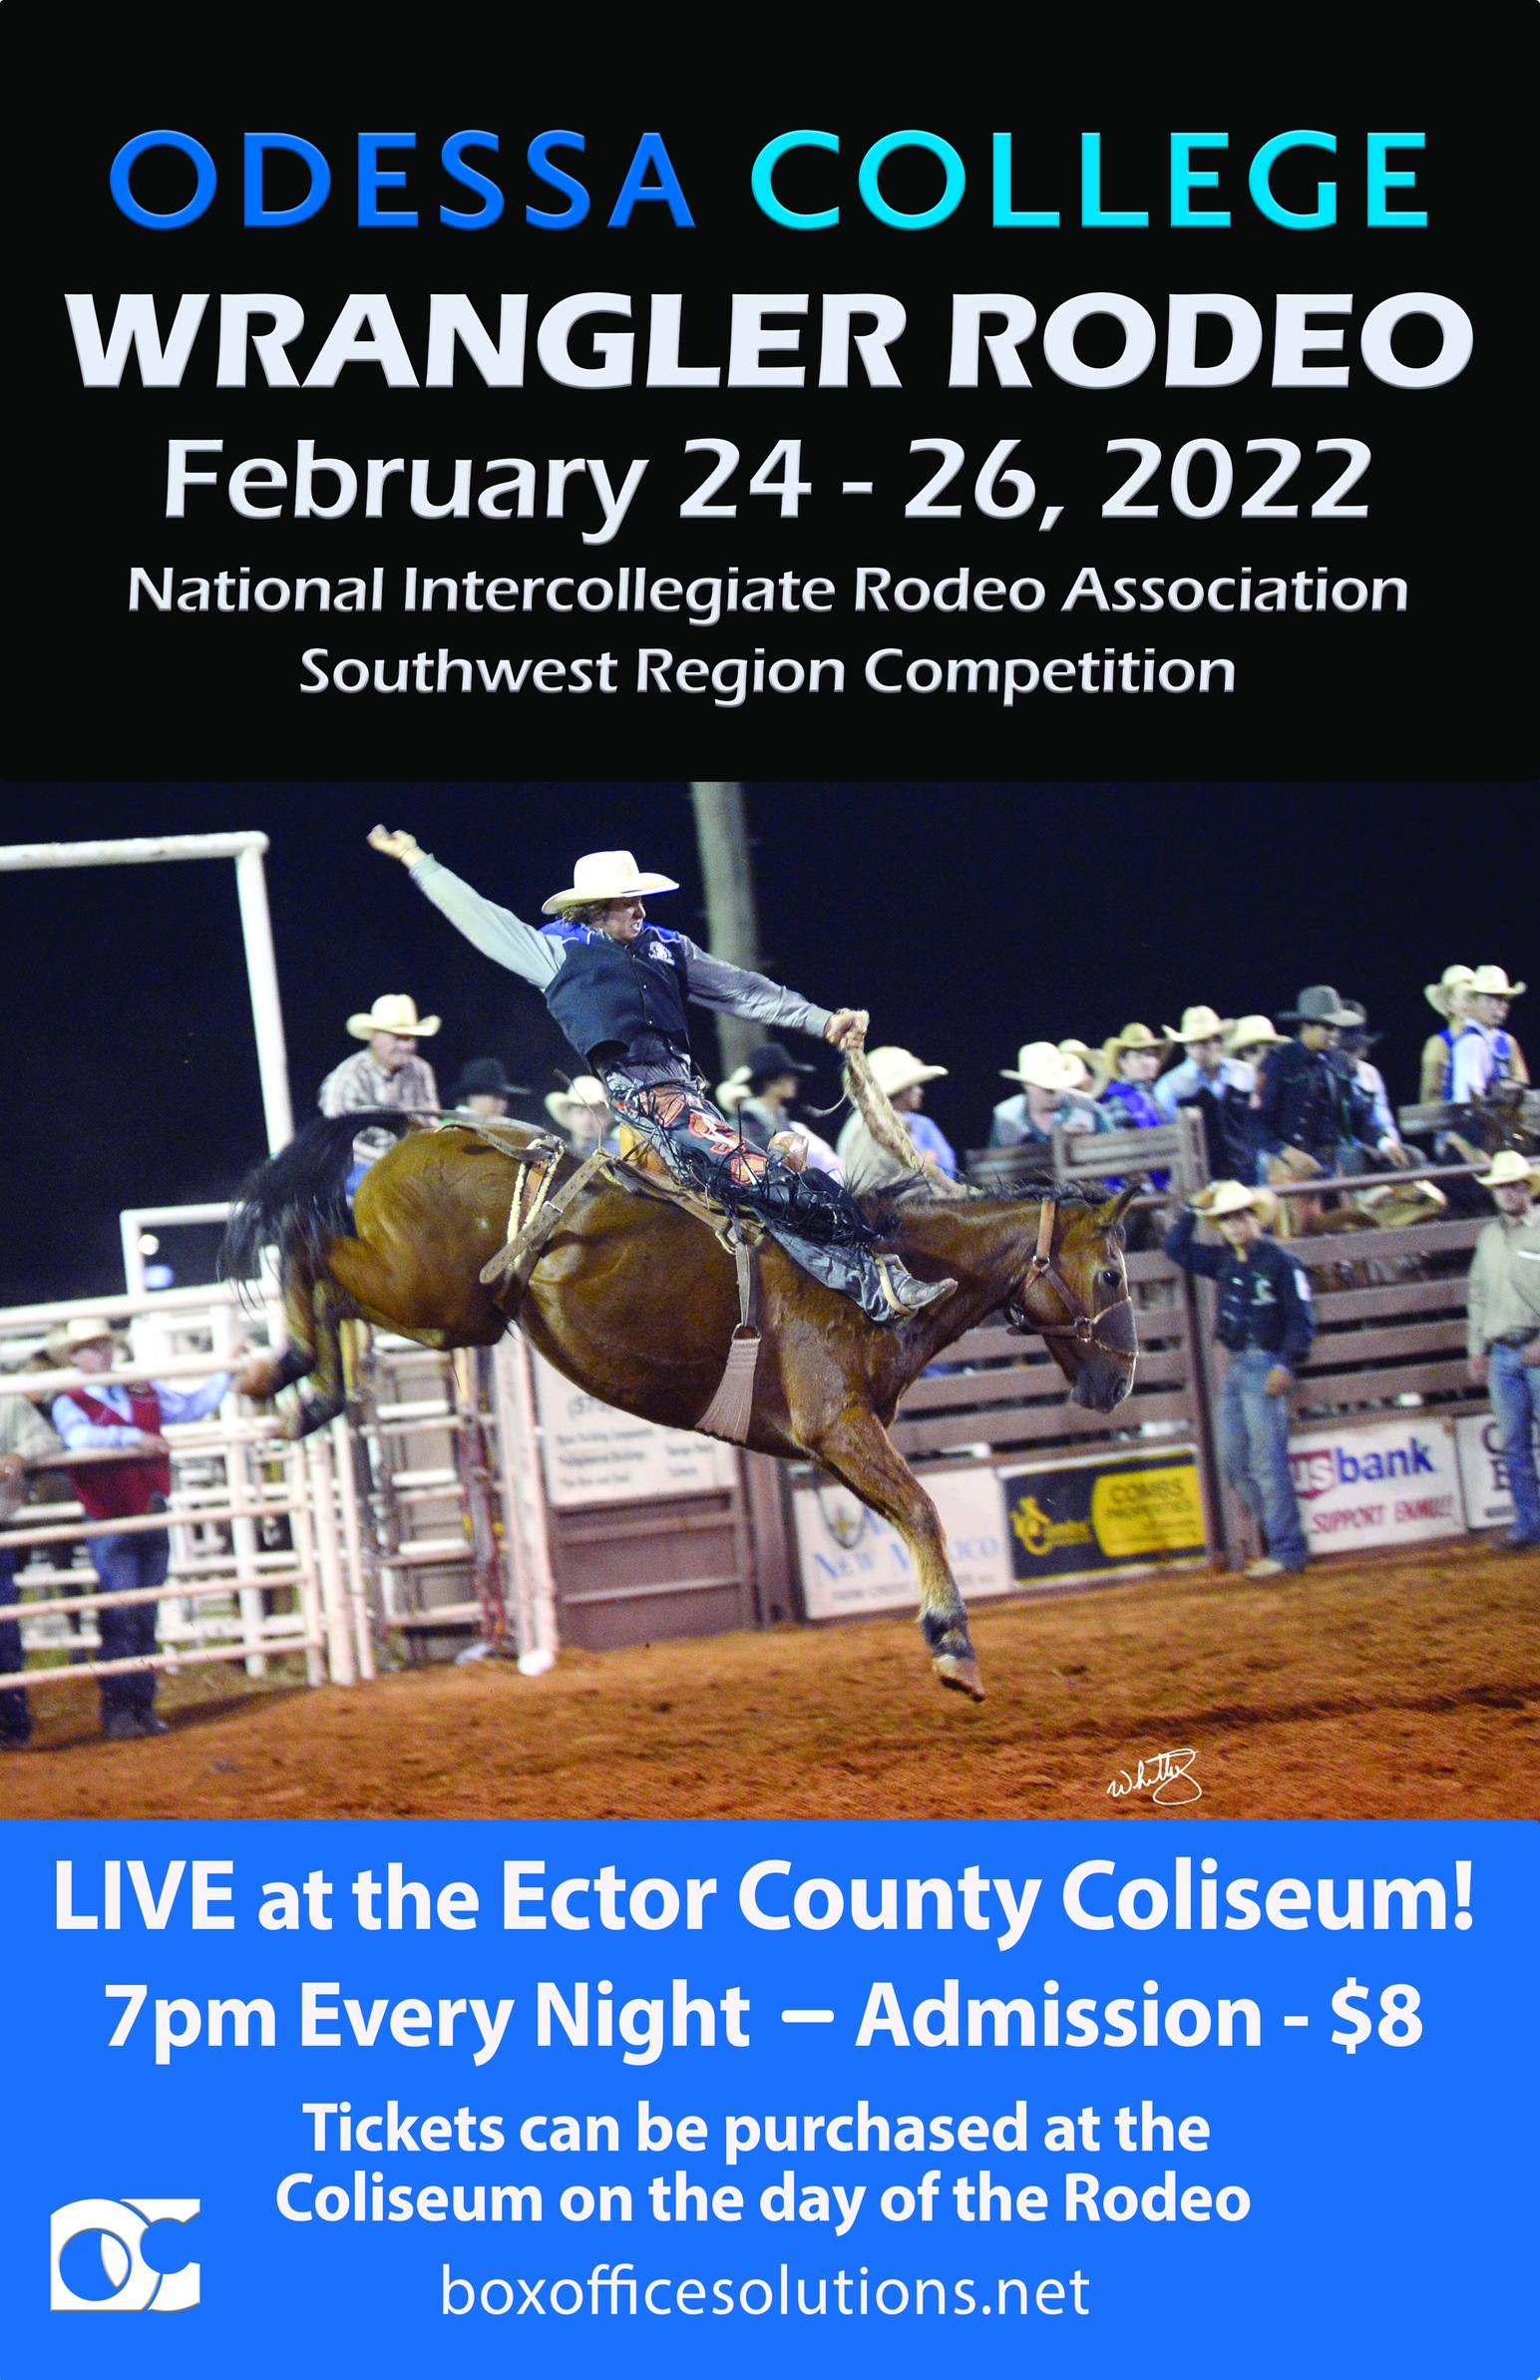 Odessa College Wrangler Rodeo February 24-26